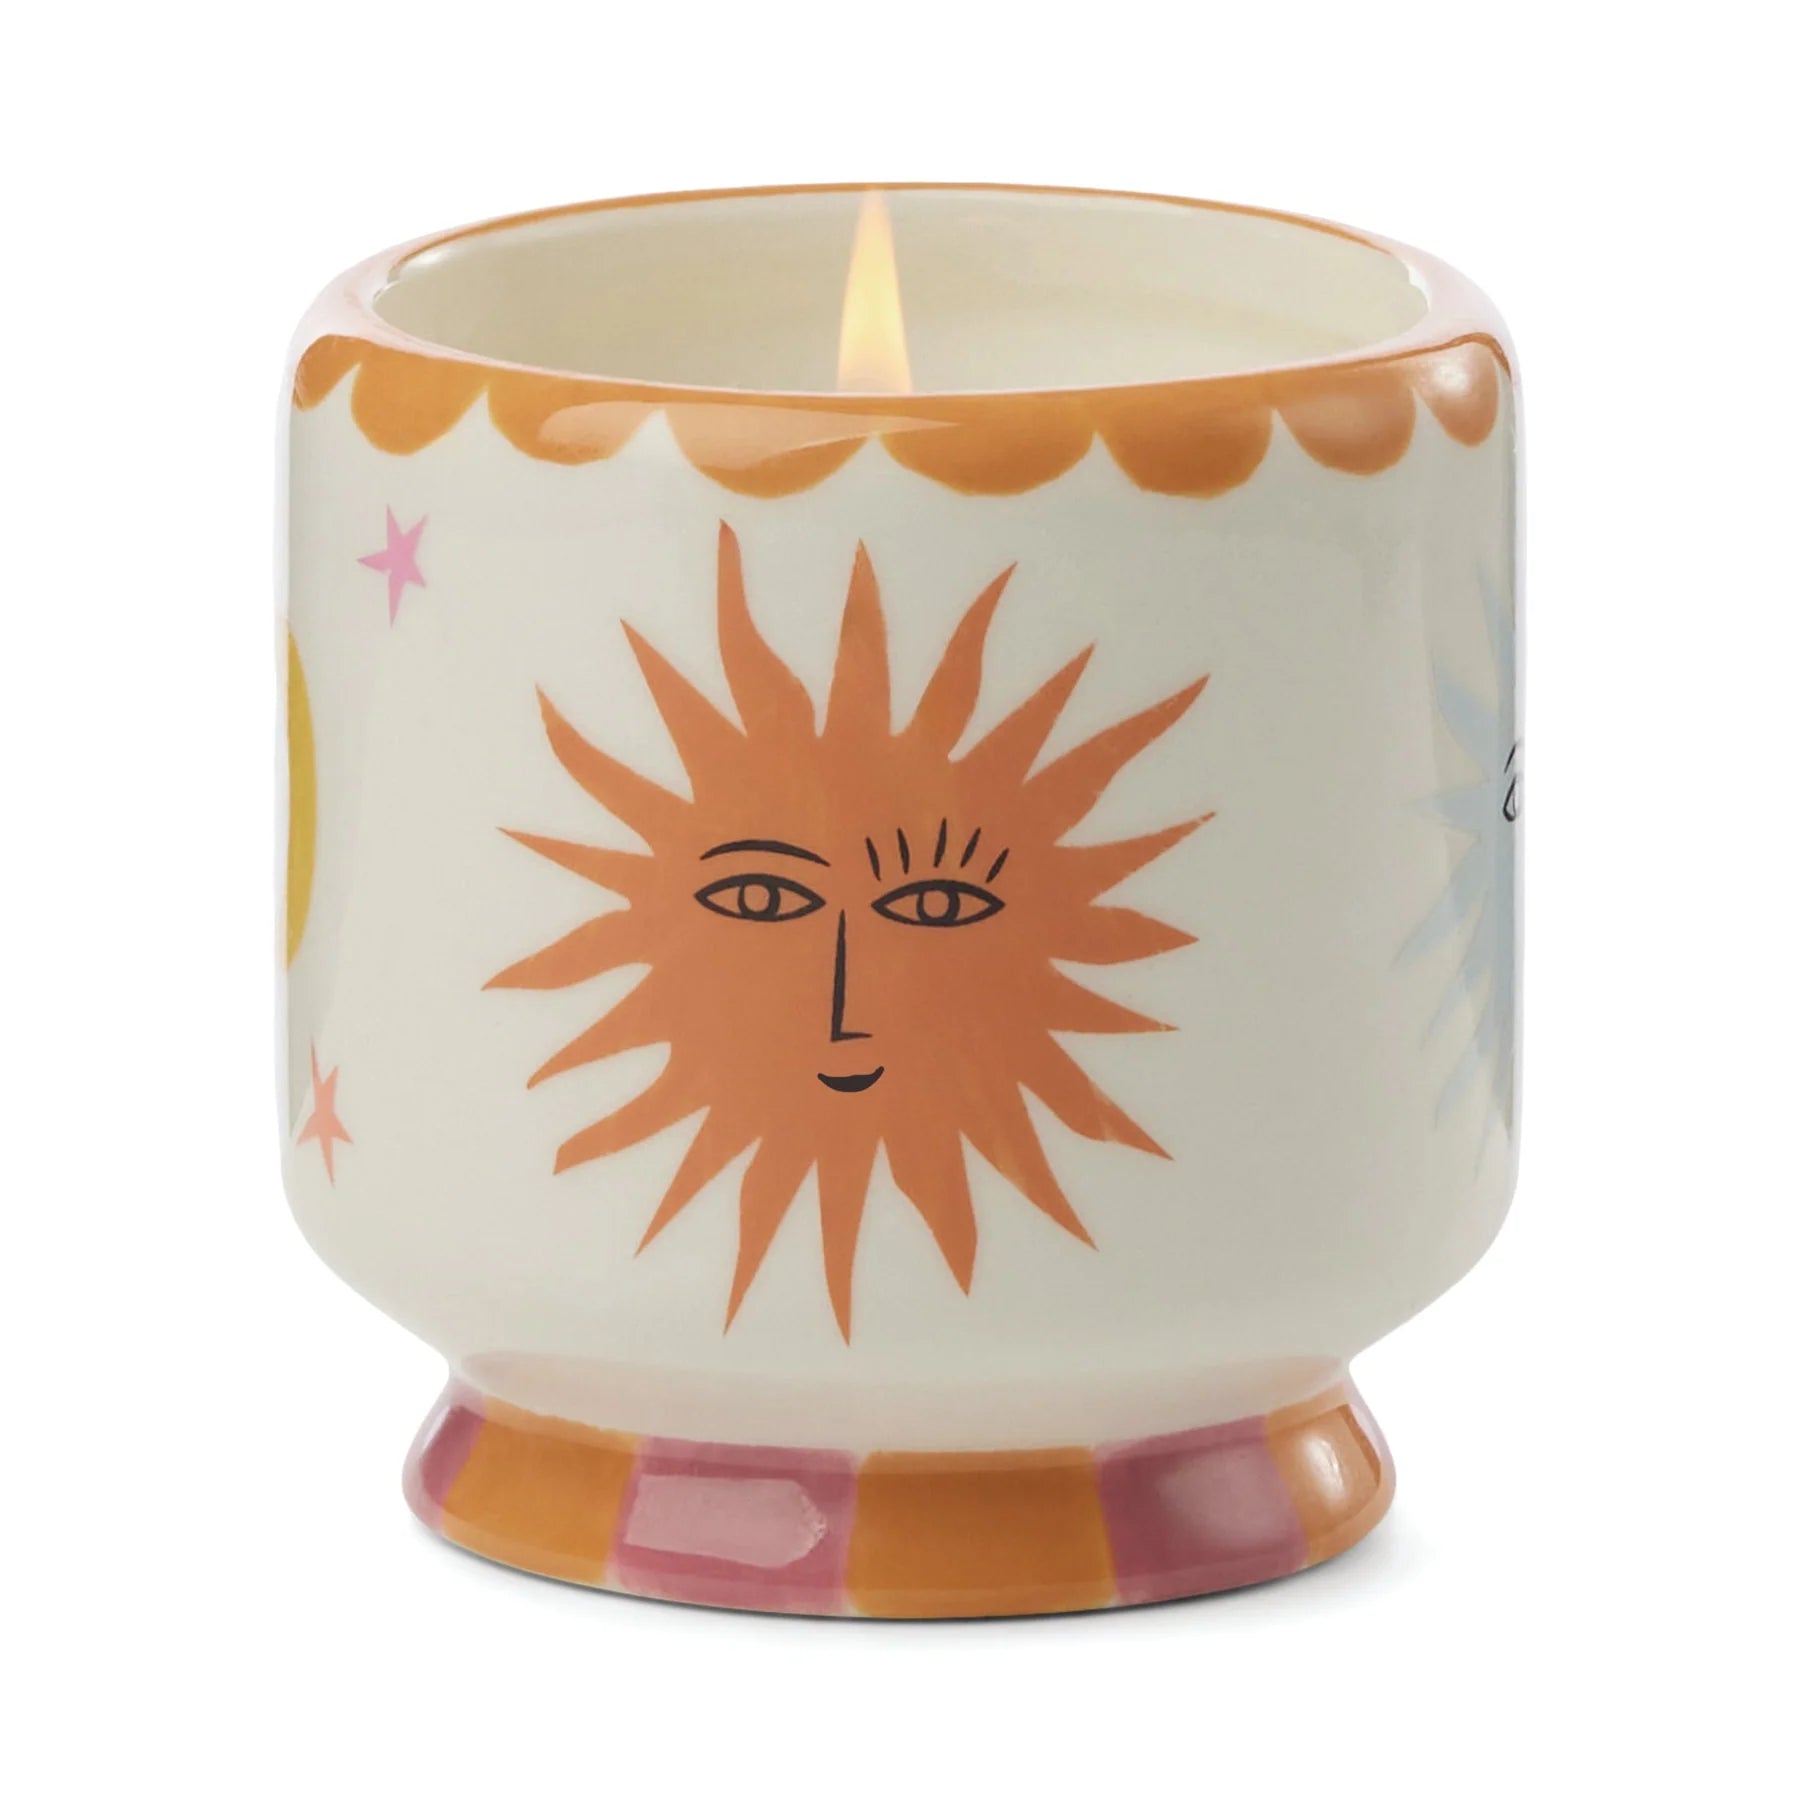 Sun Ceramic Soy Wax Candle - Orange Blossom